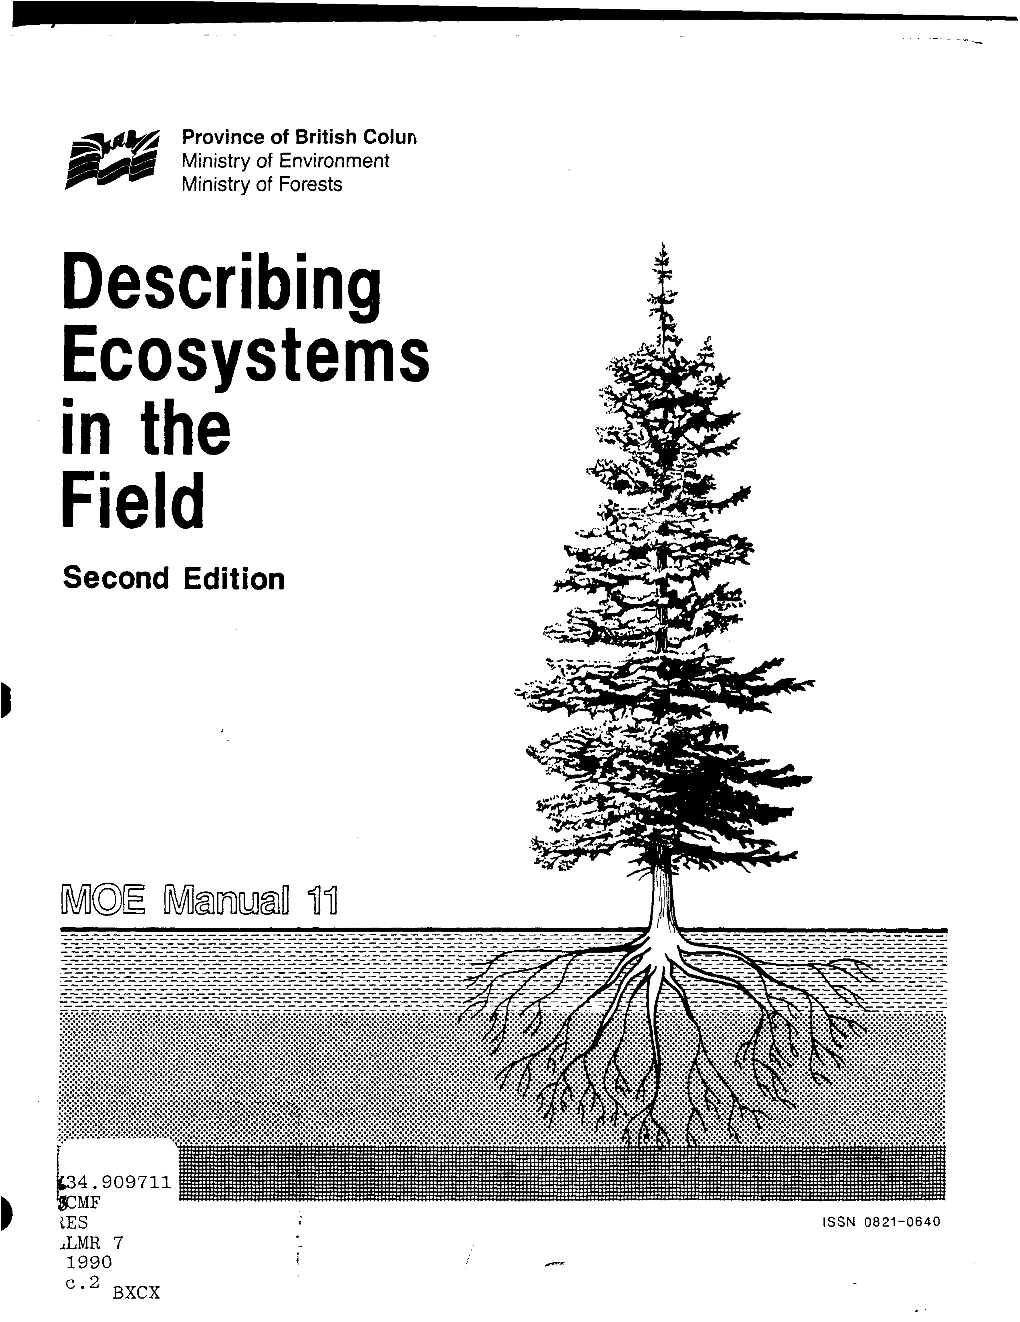 Describing Ecosystems in the Field Second Edition